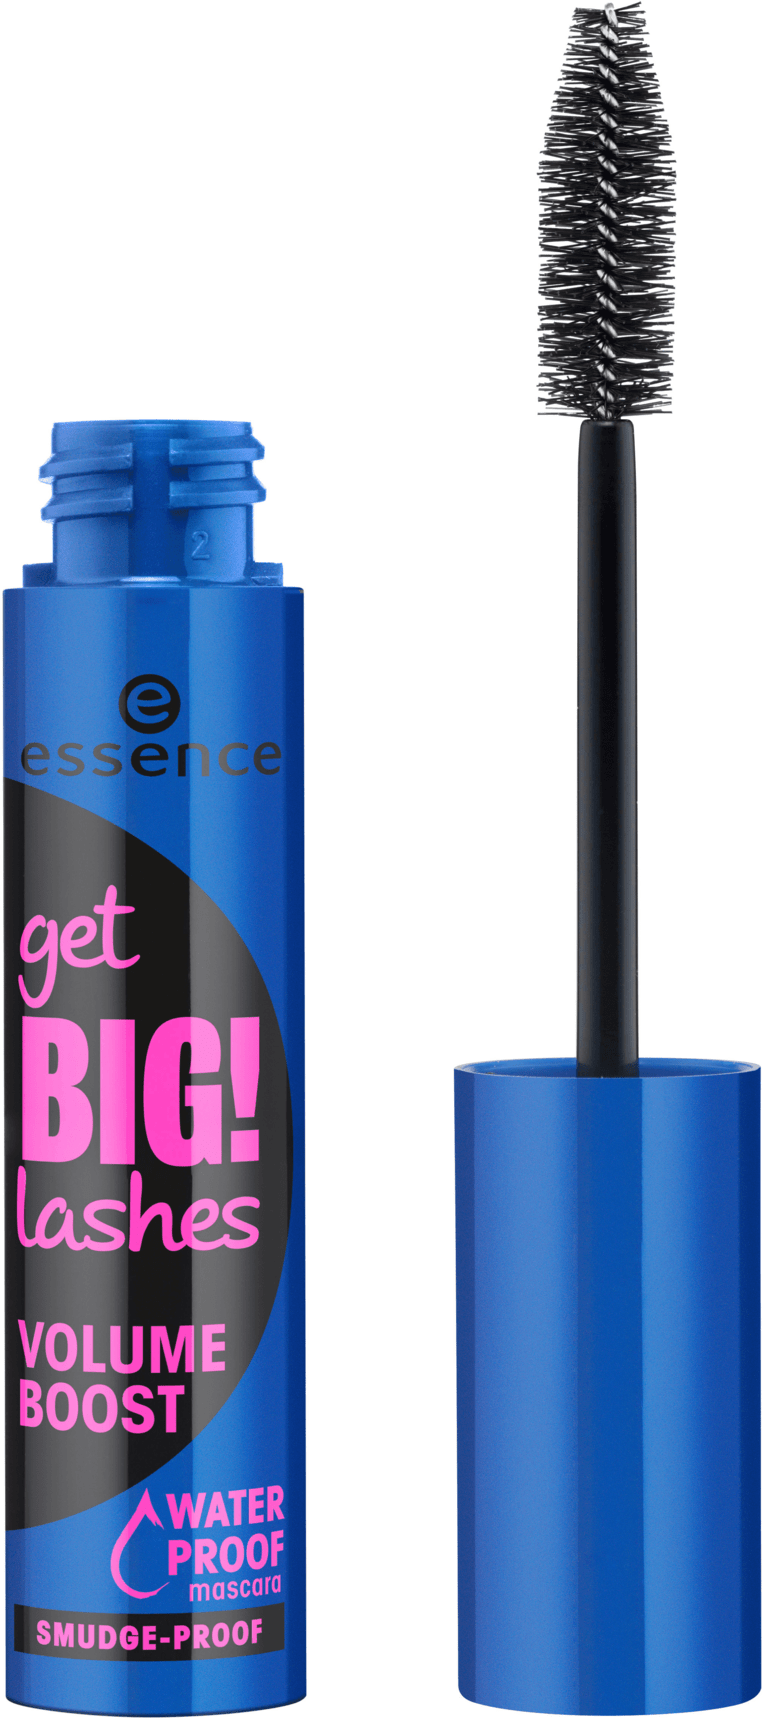 Essence Big Lashes Volume Boost Mascara